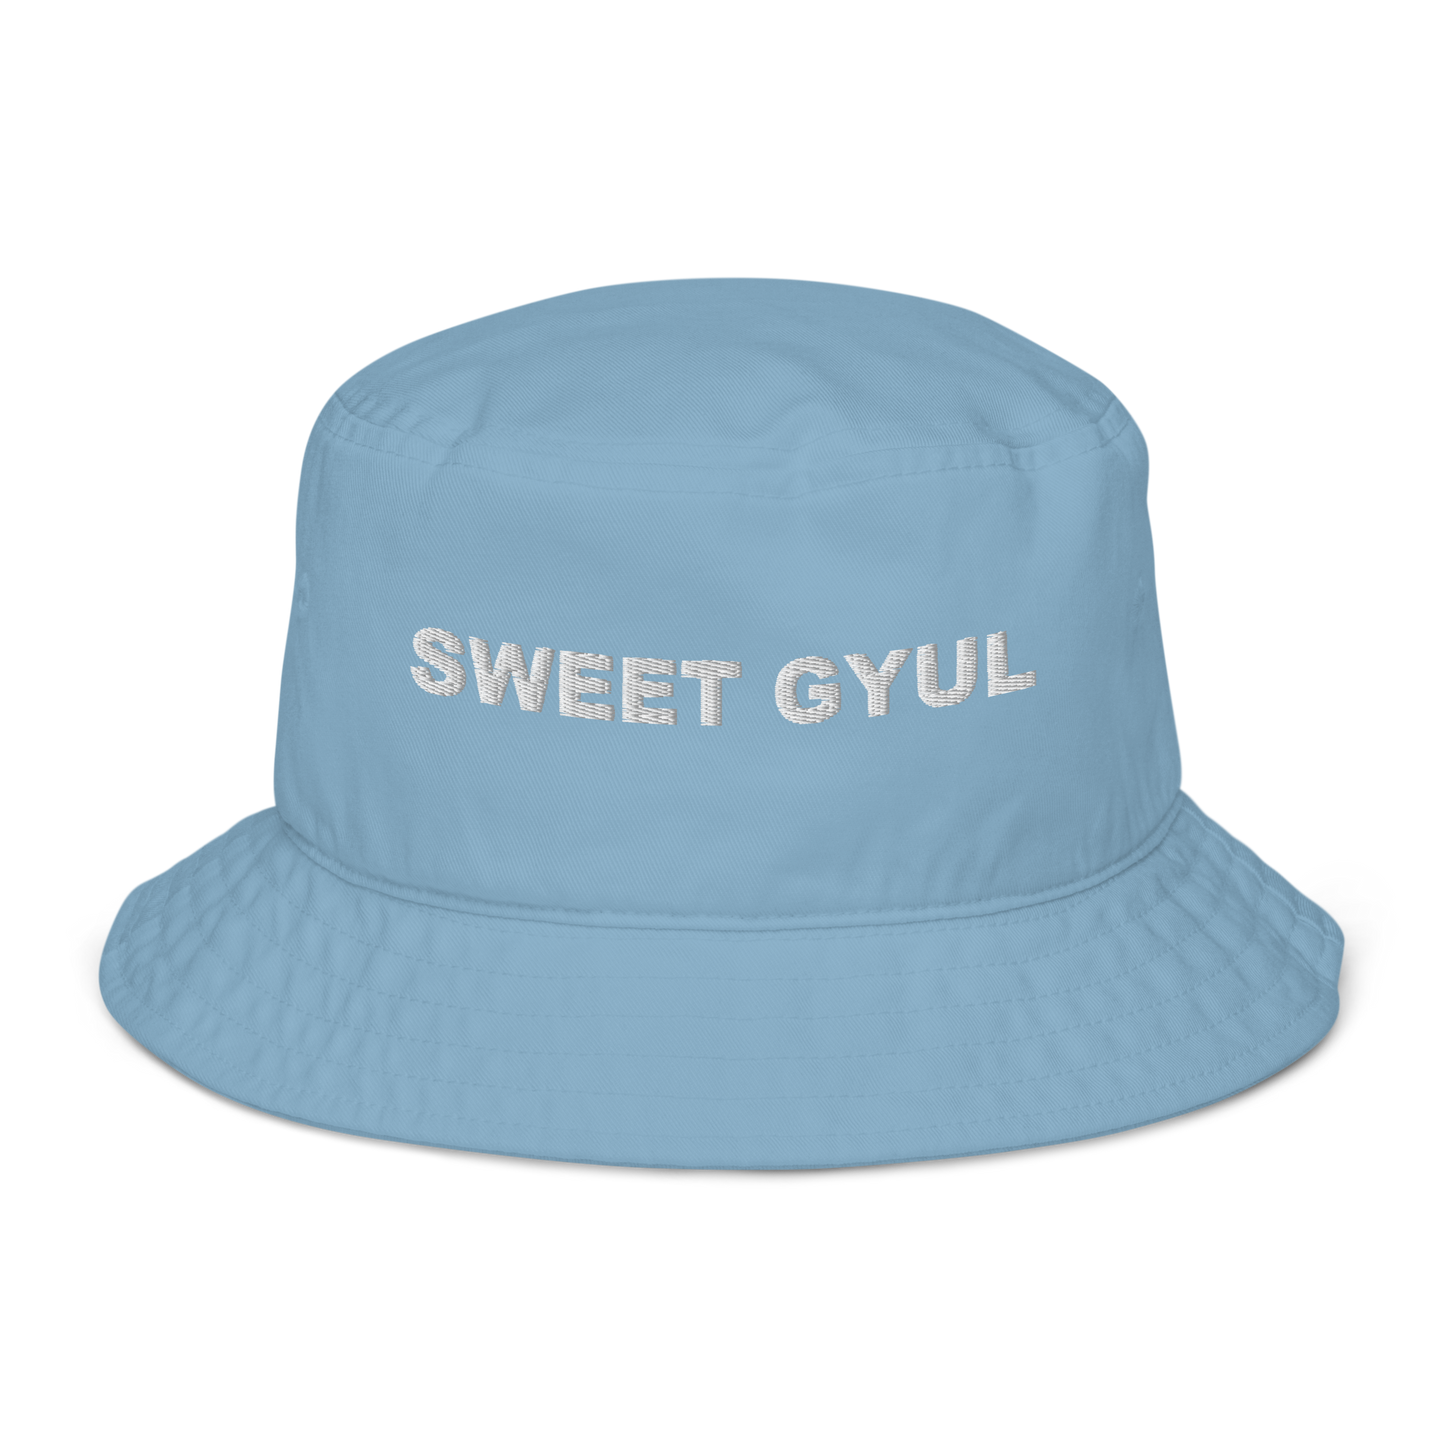 Sweey Gyul Organic bucket hat